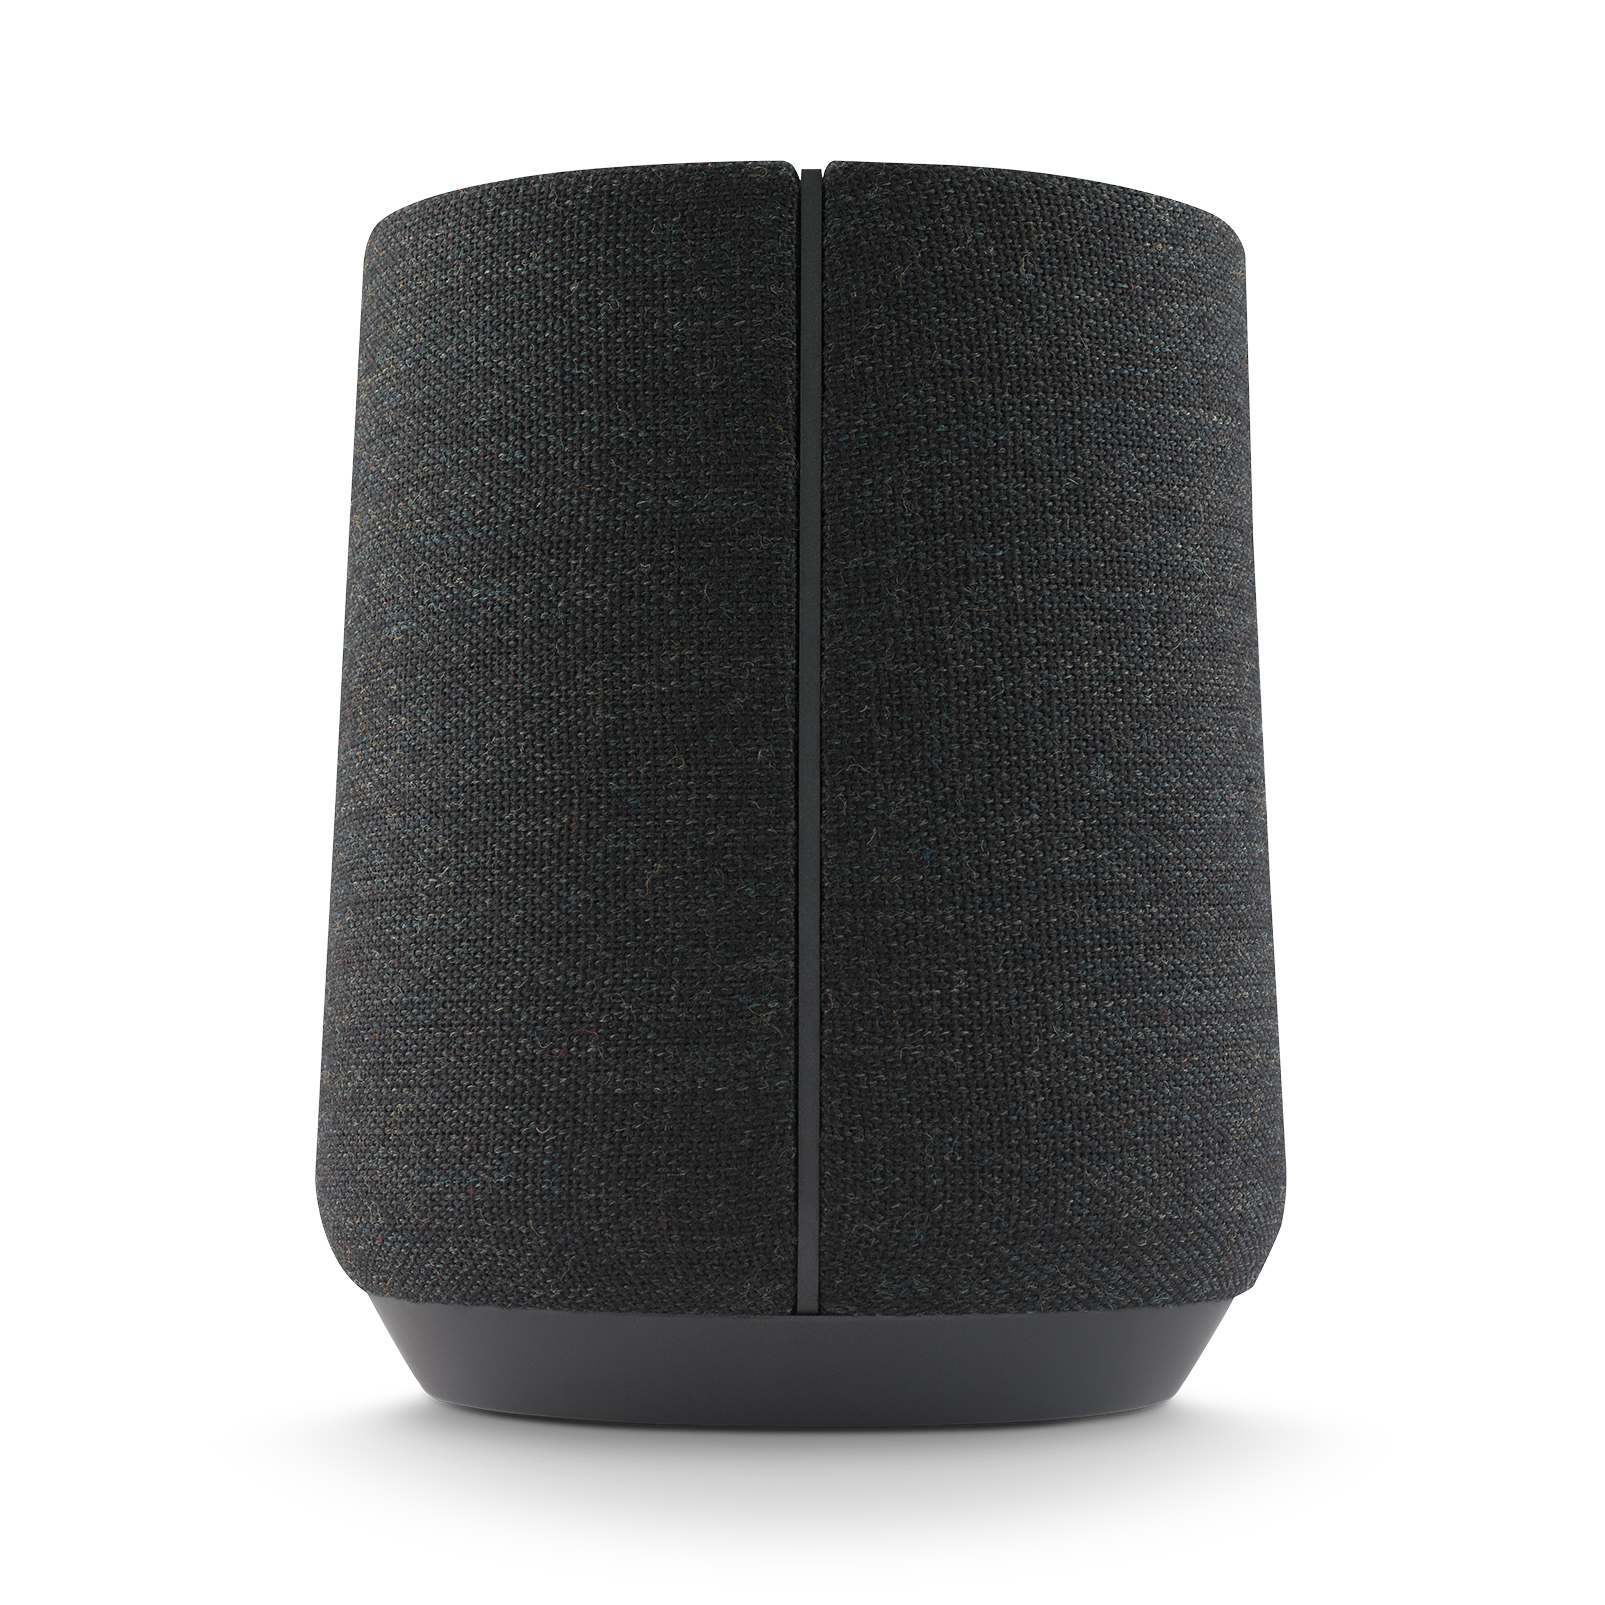 Harman Kardon Citation 300 - Black - The medium-size smart home speaker with award winning design - Detailshot 3